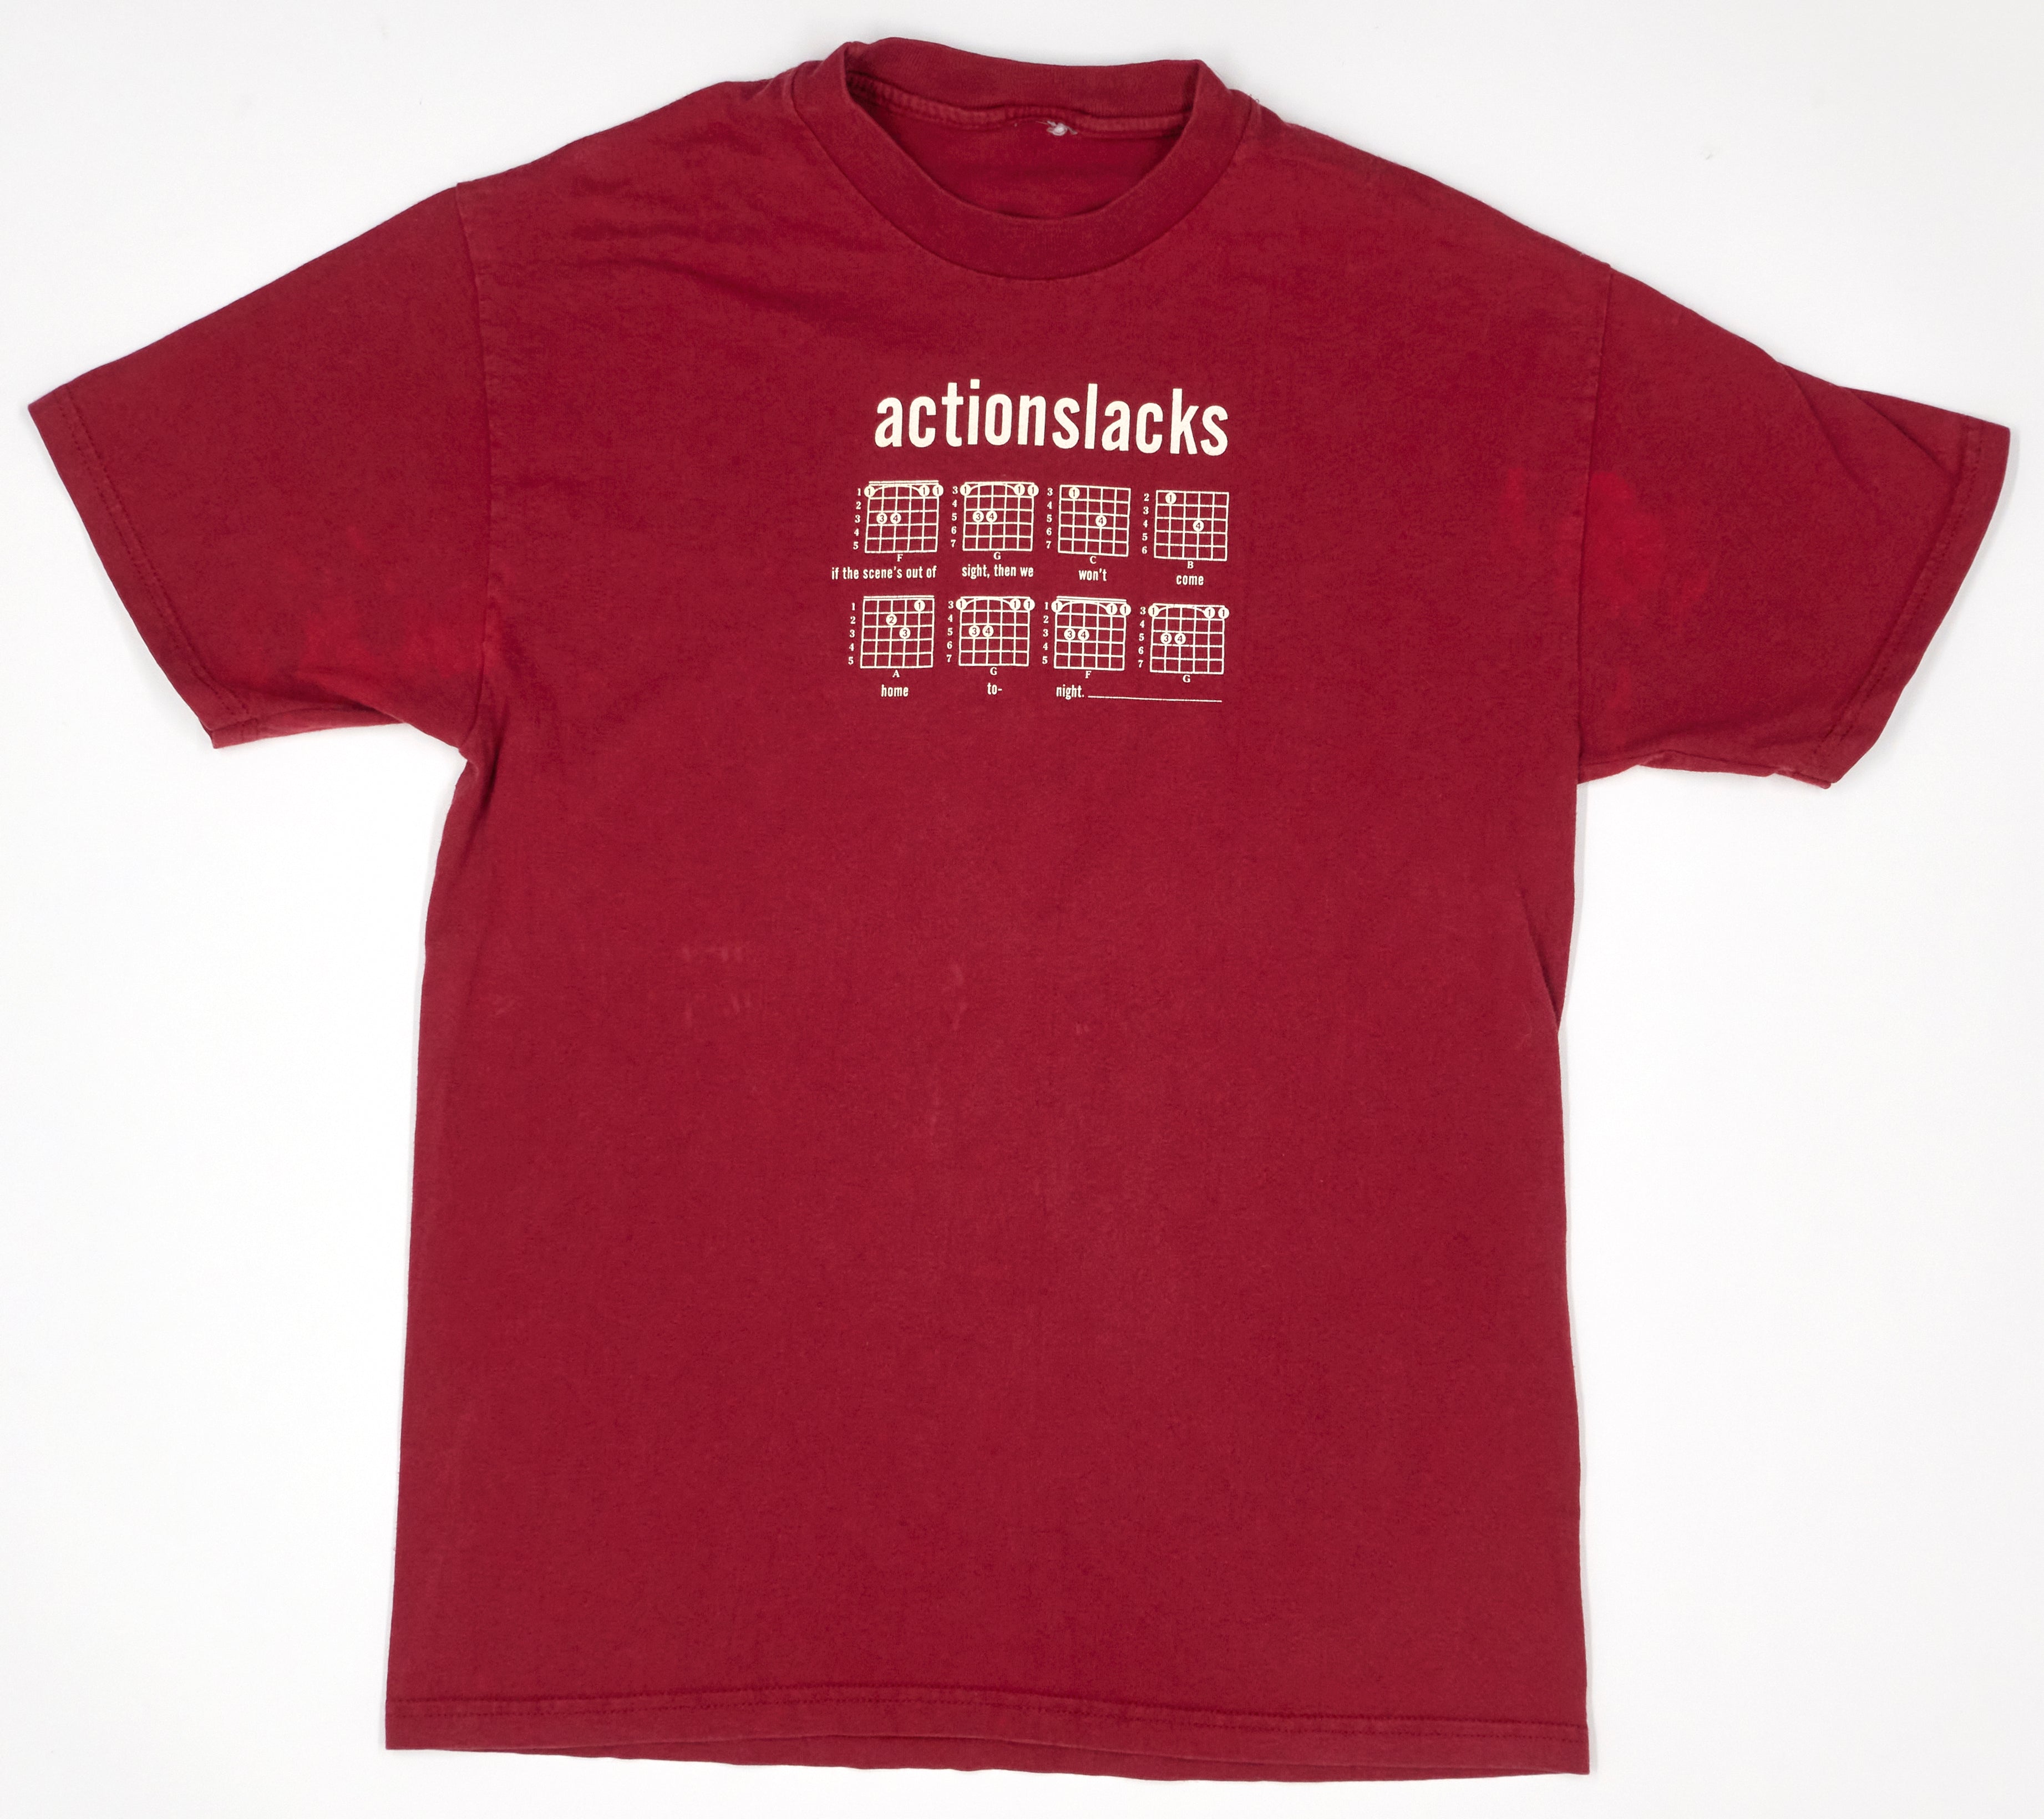 Actionslacks – Scene's Out Of Sight / 23 Steps Spring 2001 Tour Shirt Size Medium